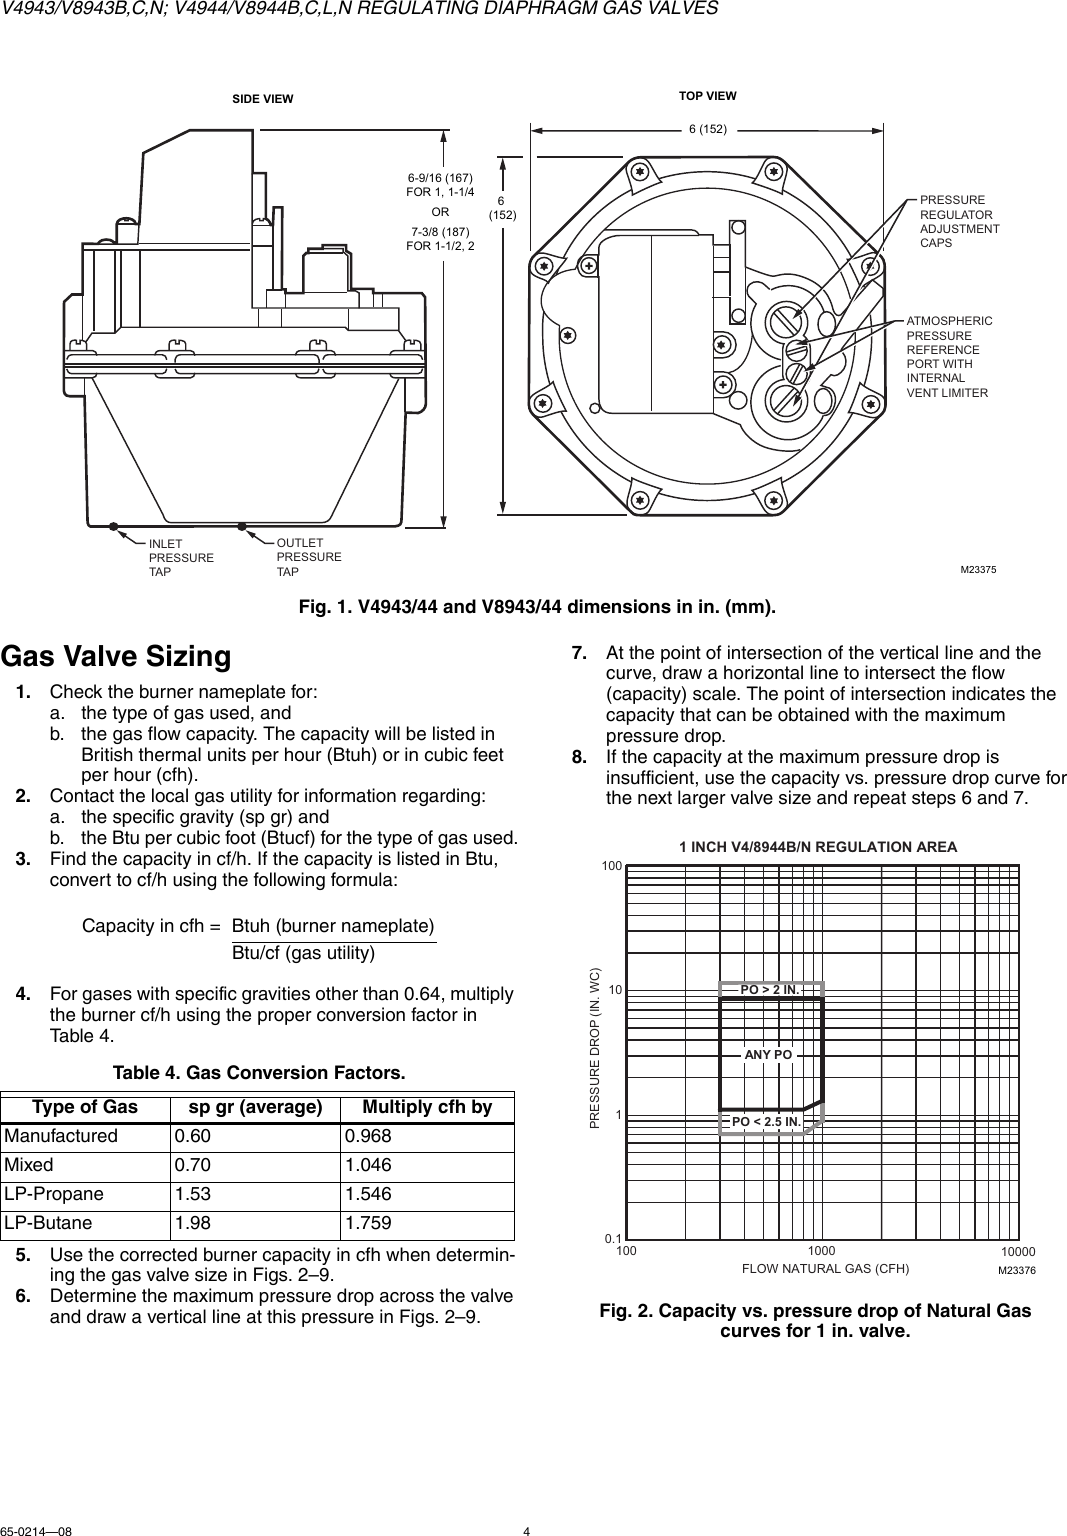 Honeywell Thermostat V4944 Users Manual 65 0214 08 V4943 V8943b C N V4944 V8944b C L N Regulating Diaphragm Gas Valves